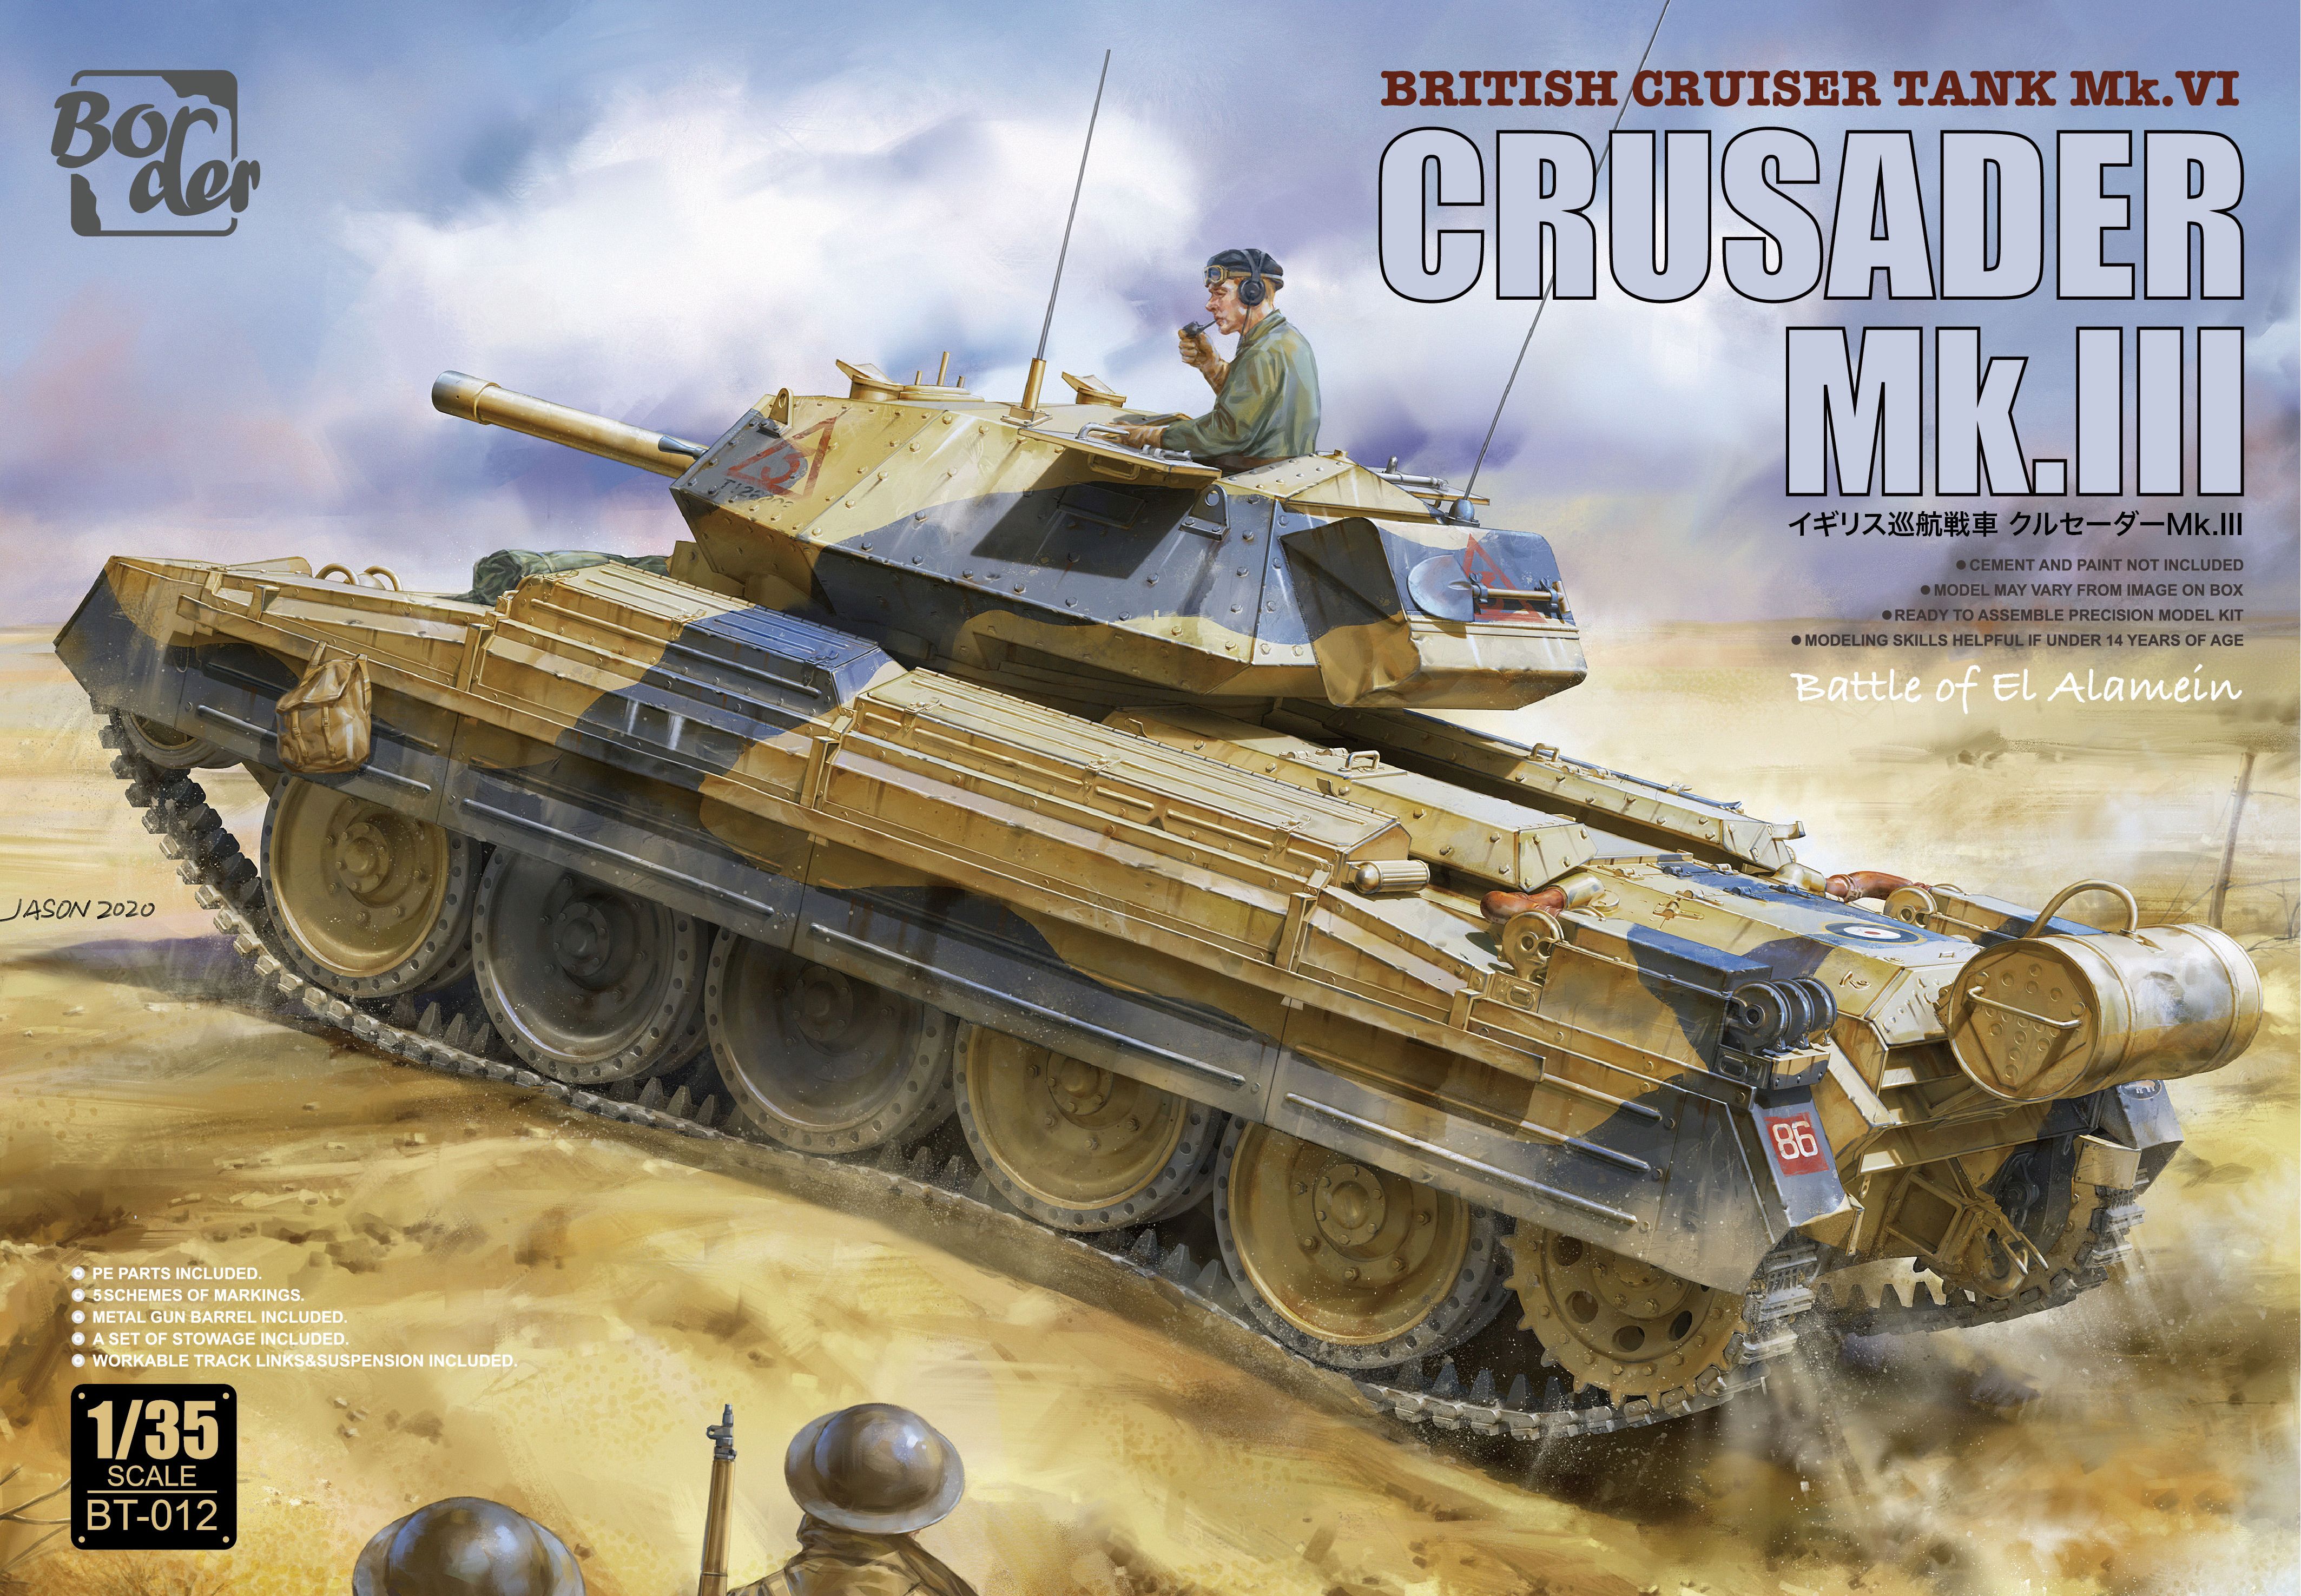 Border Models 1/35 British Cruiser Tank Crusader Model Kit